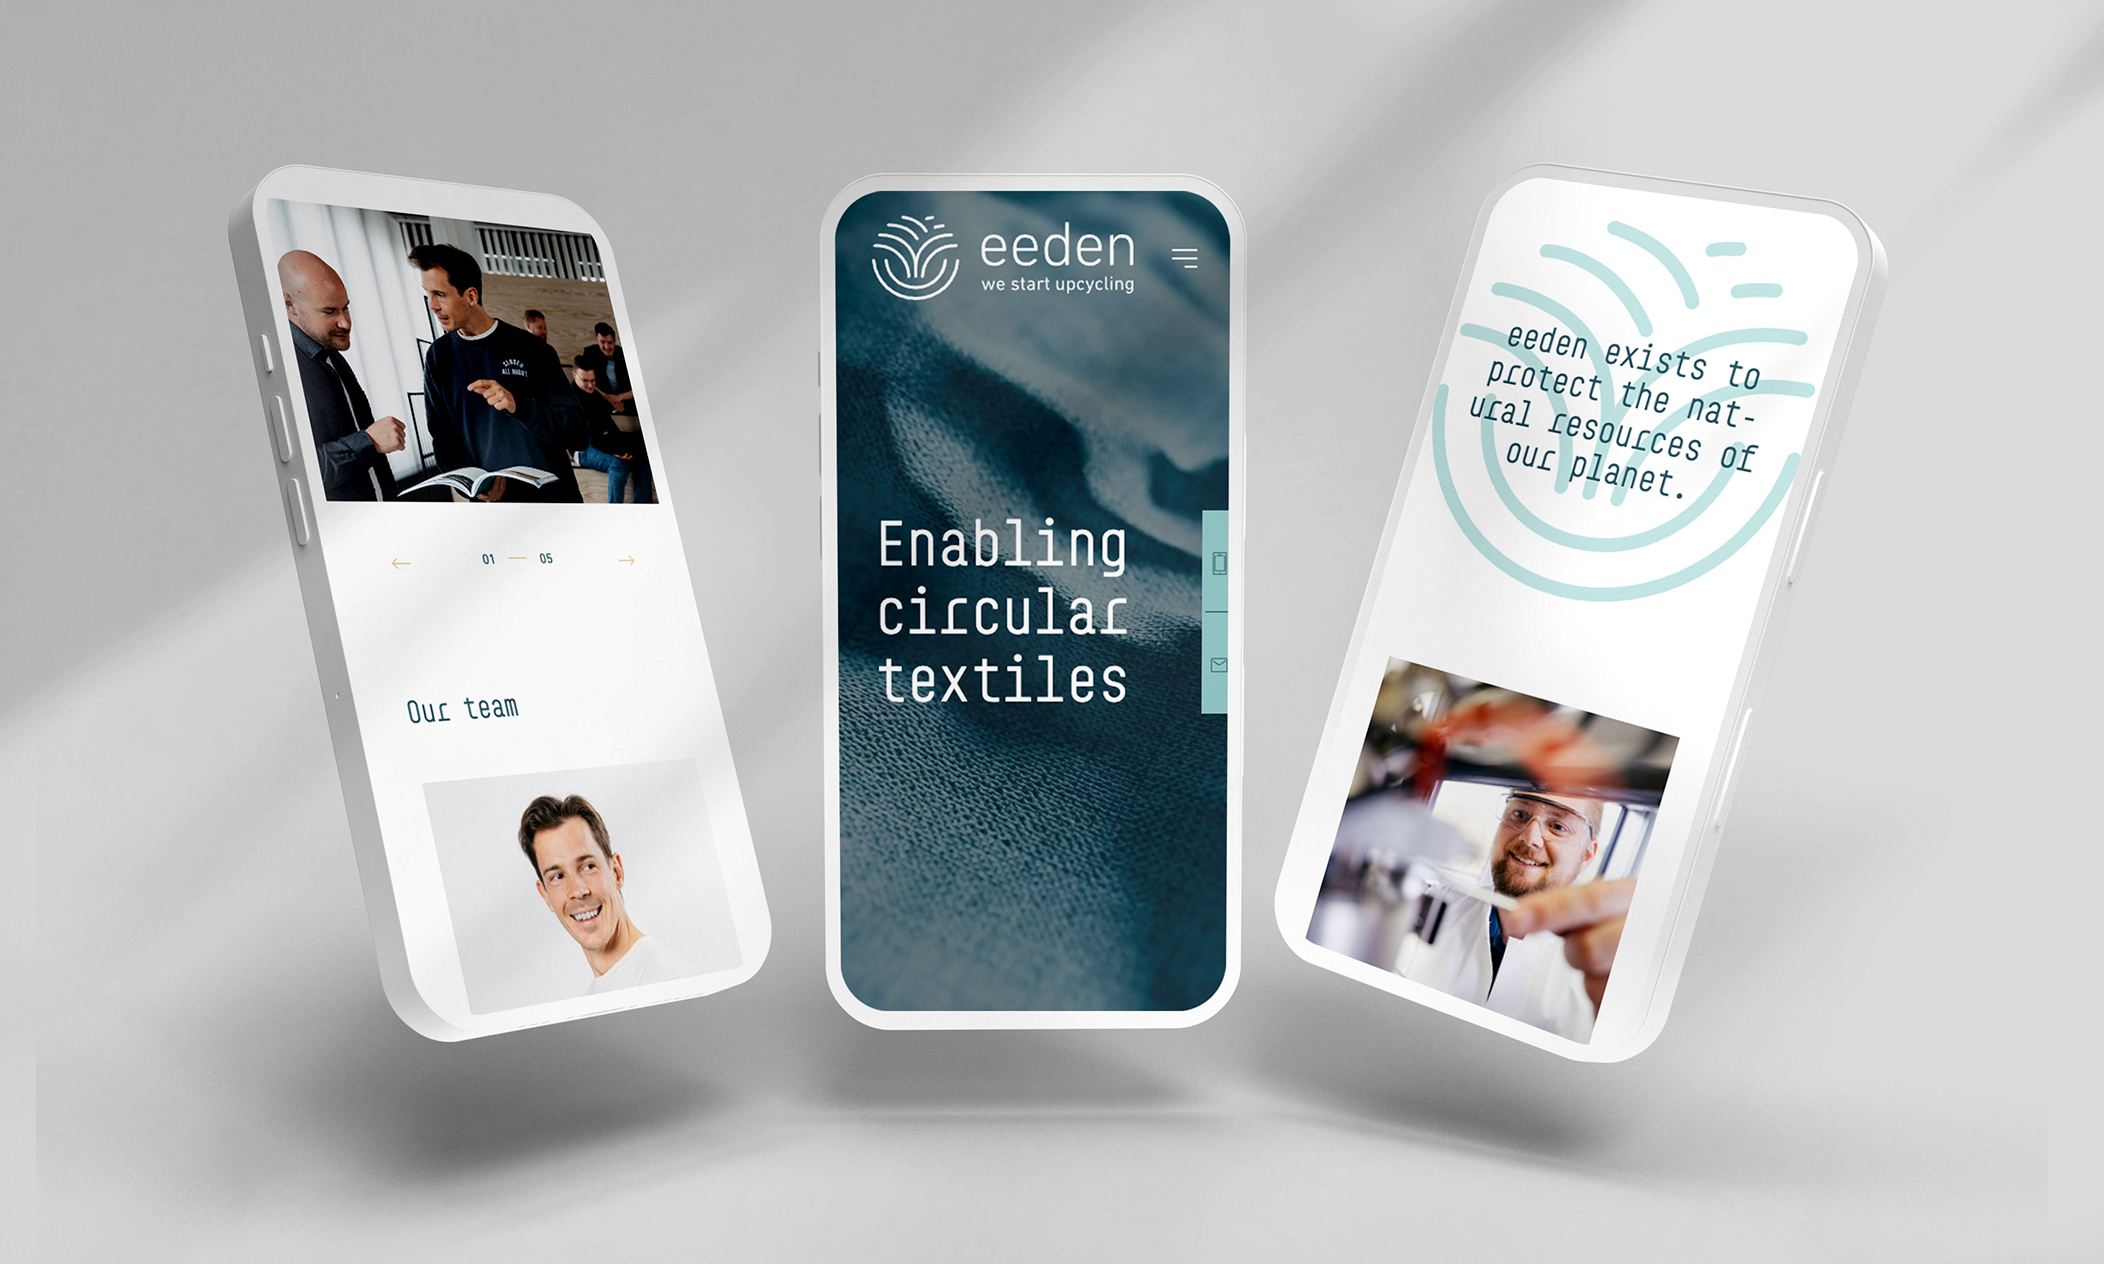 eeden_webdesign_website_02_corporate_design_teamlemke_aachen_werbeagentur_2104x1264